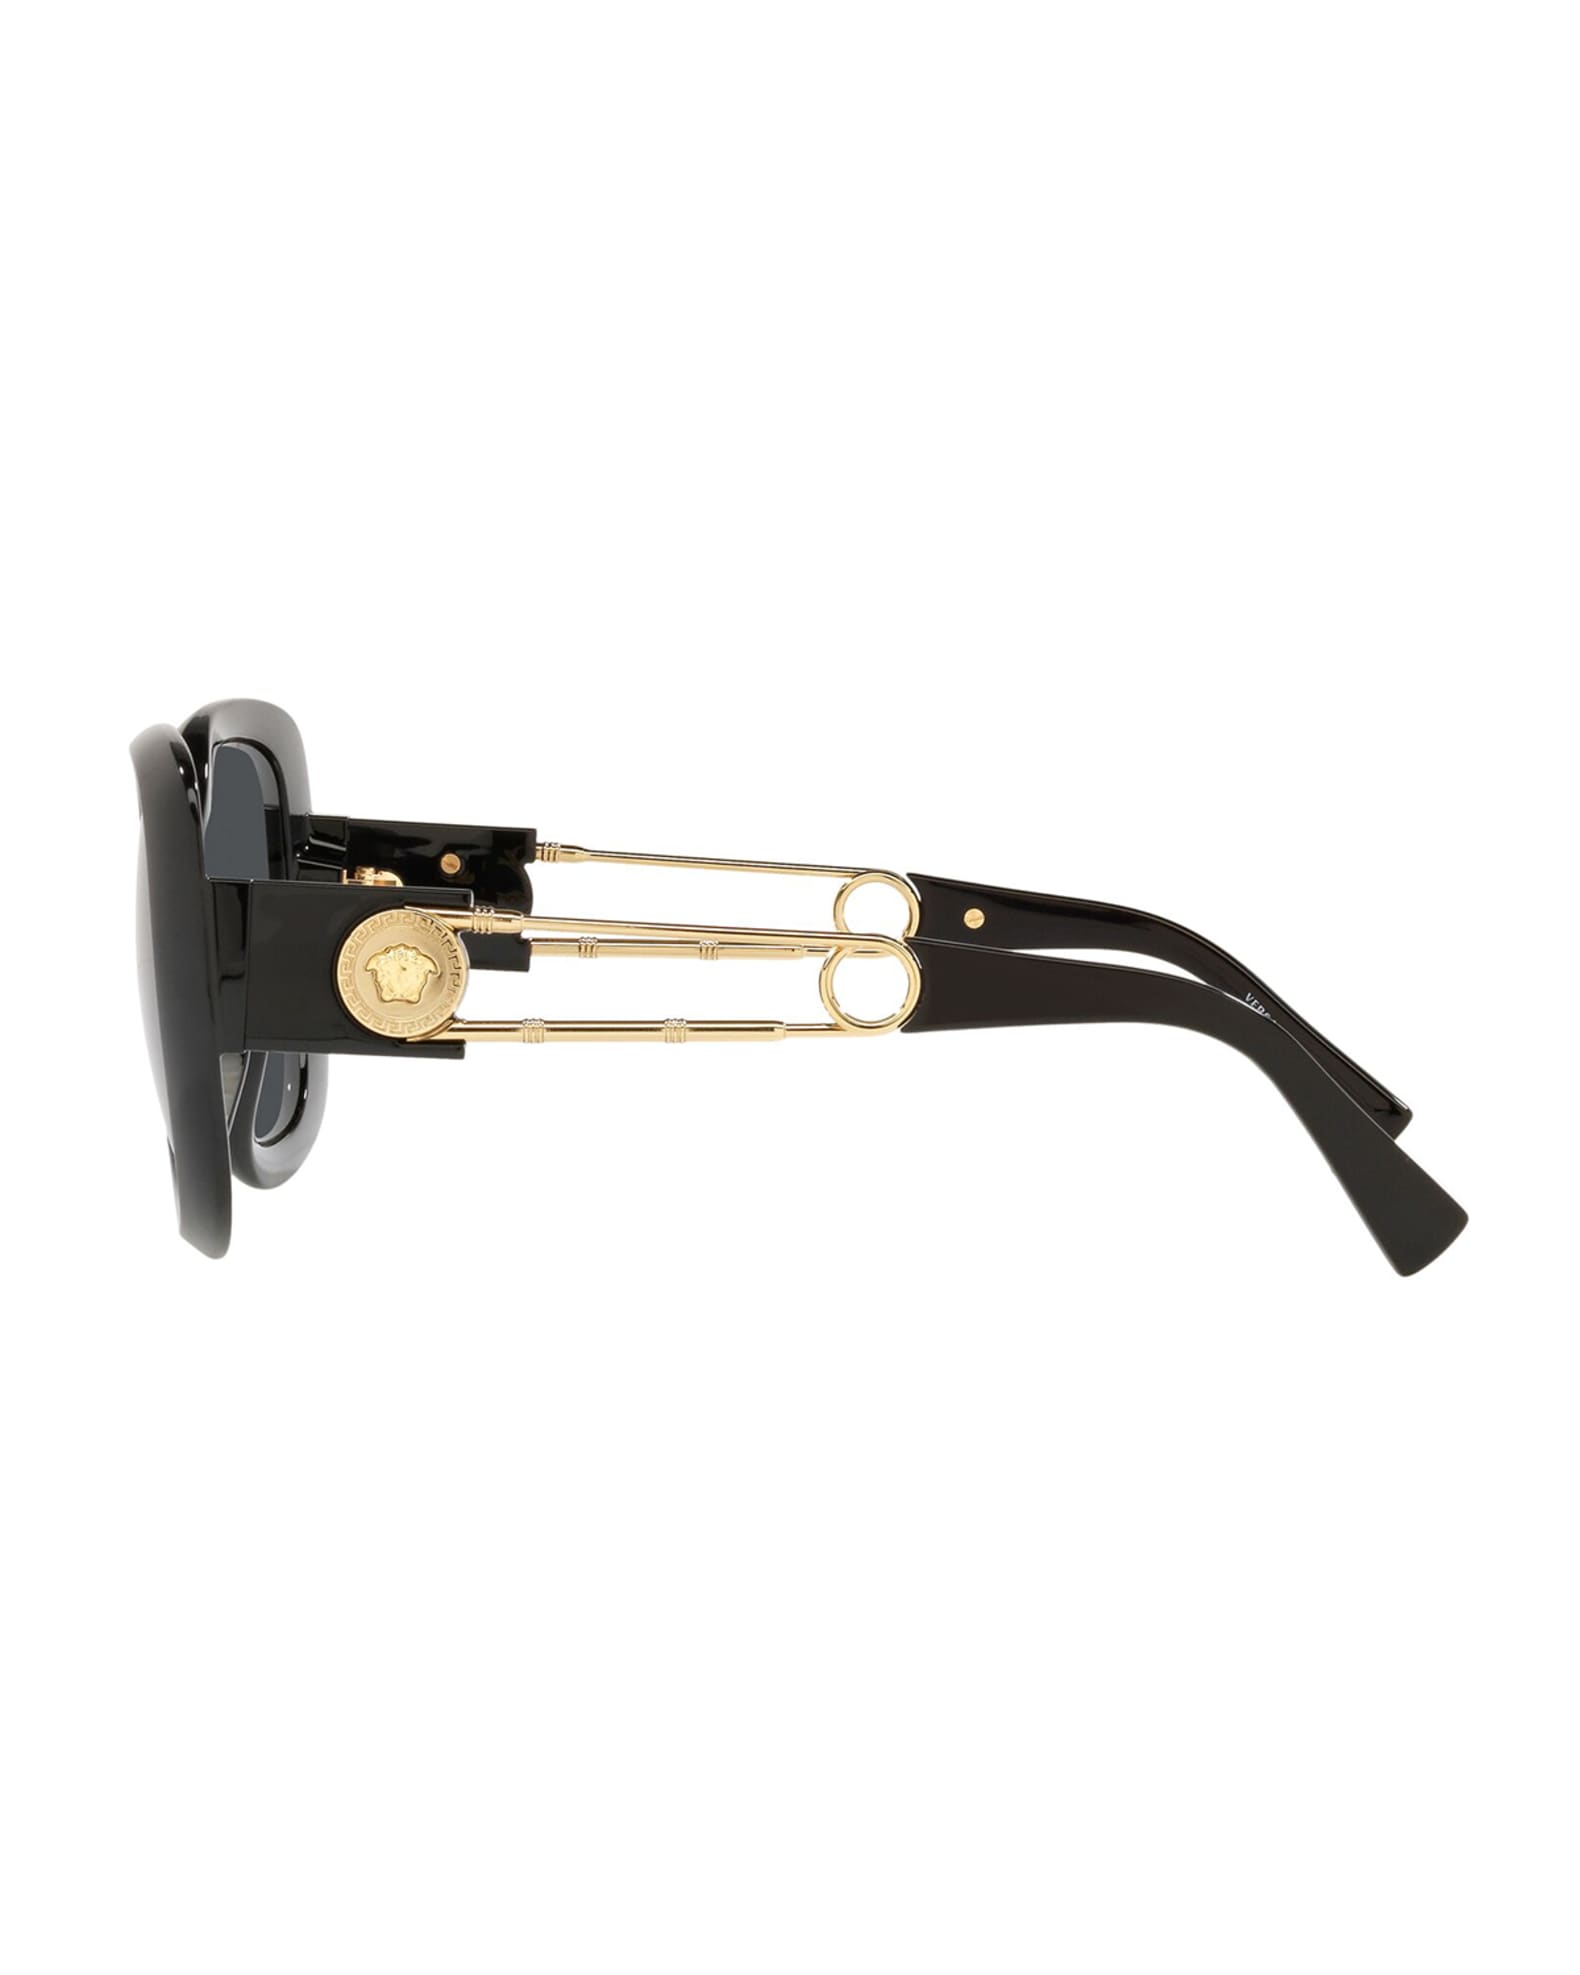 Versace Medusa Safety Pin Square Propionate Sunglasses | Neiman Marcus